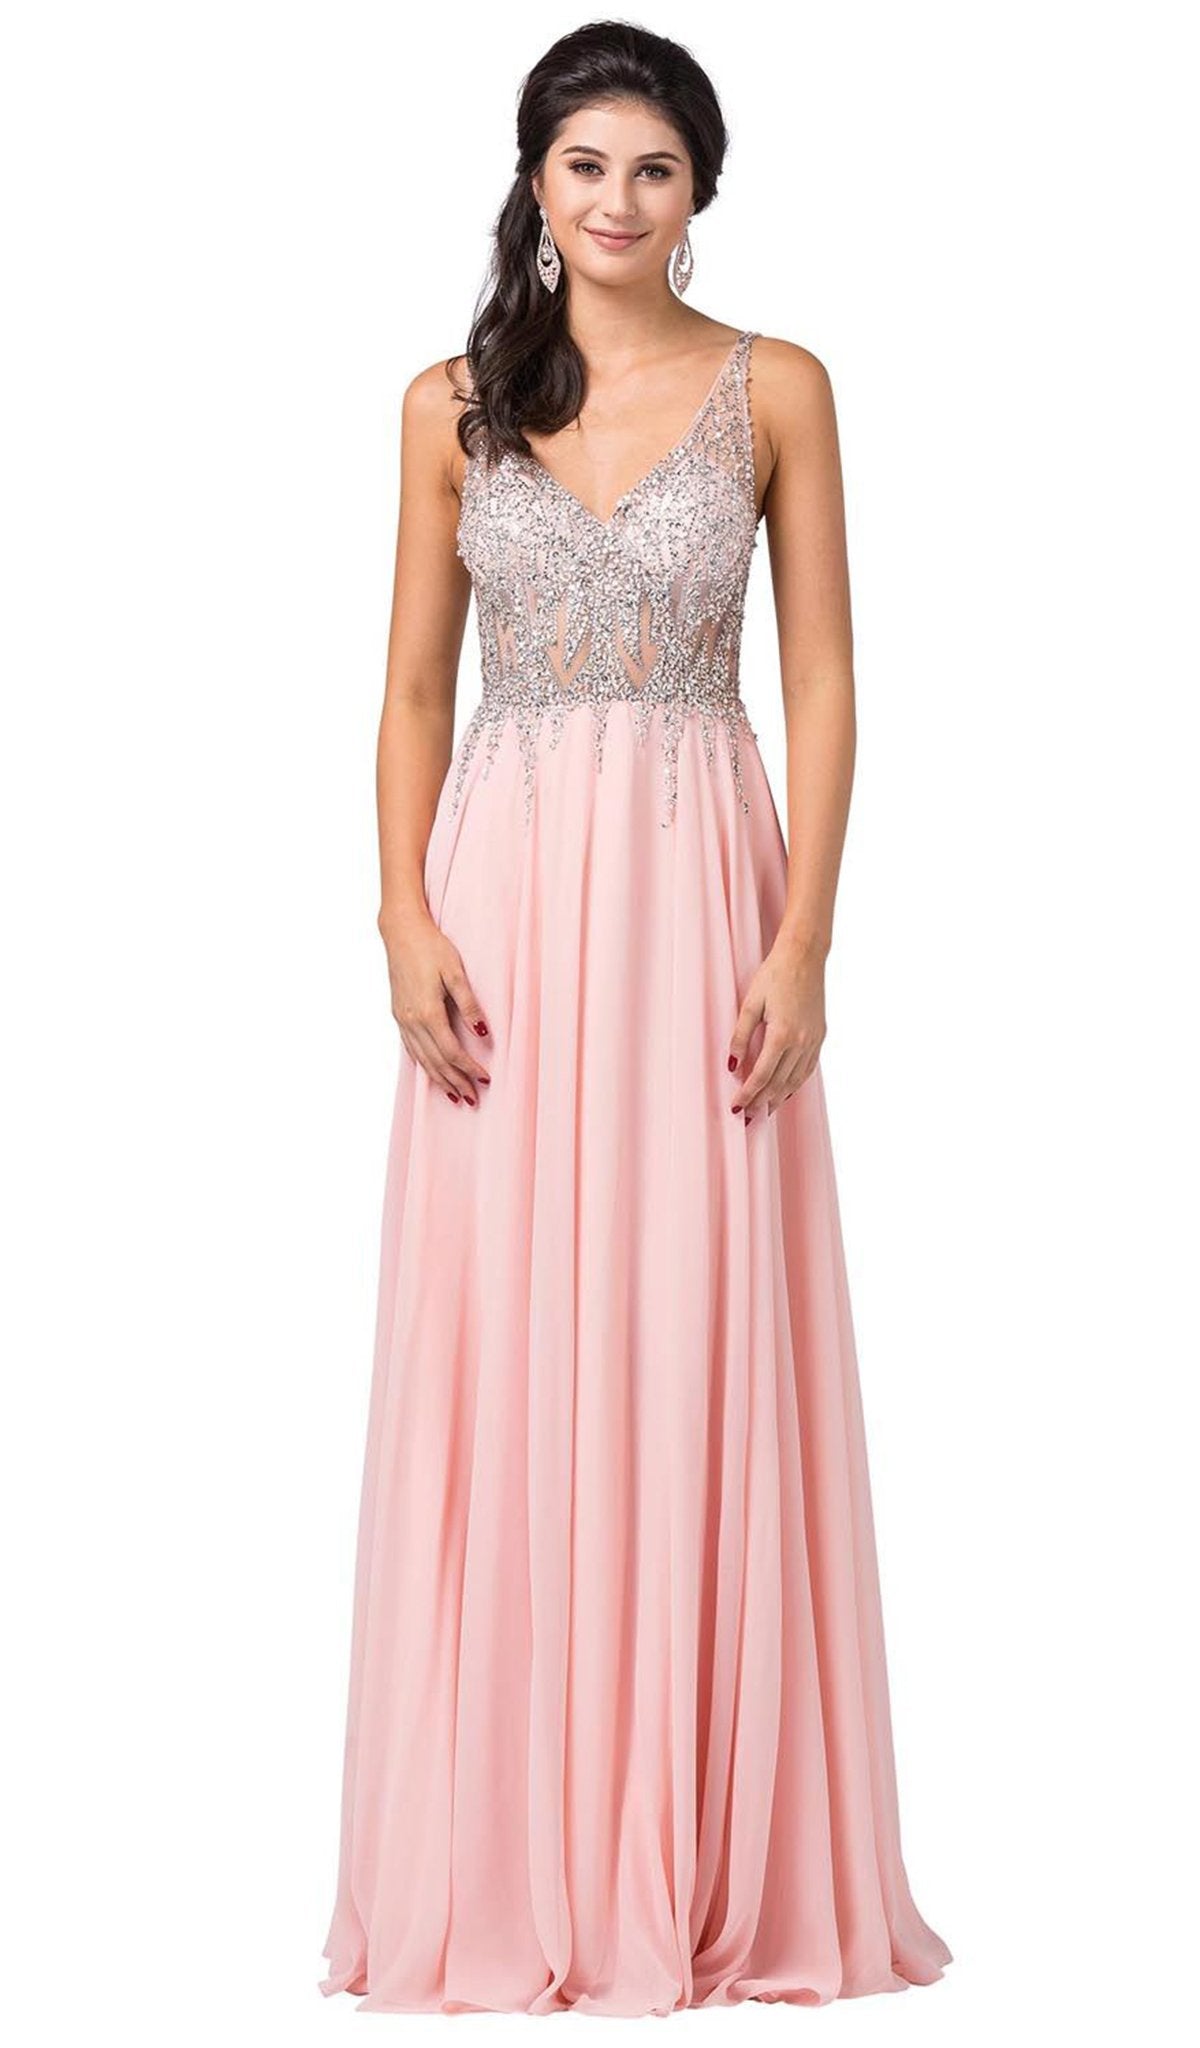 Dancing Queen - 2570 Jewel Ornate Illusion Bodice Chiffon Prom Dress In Pink